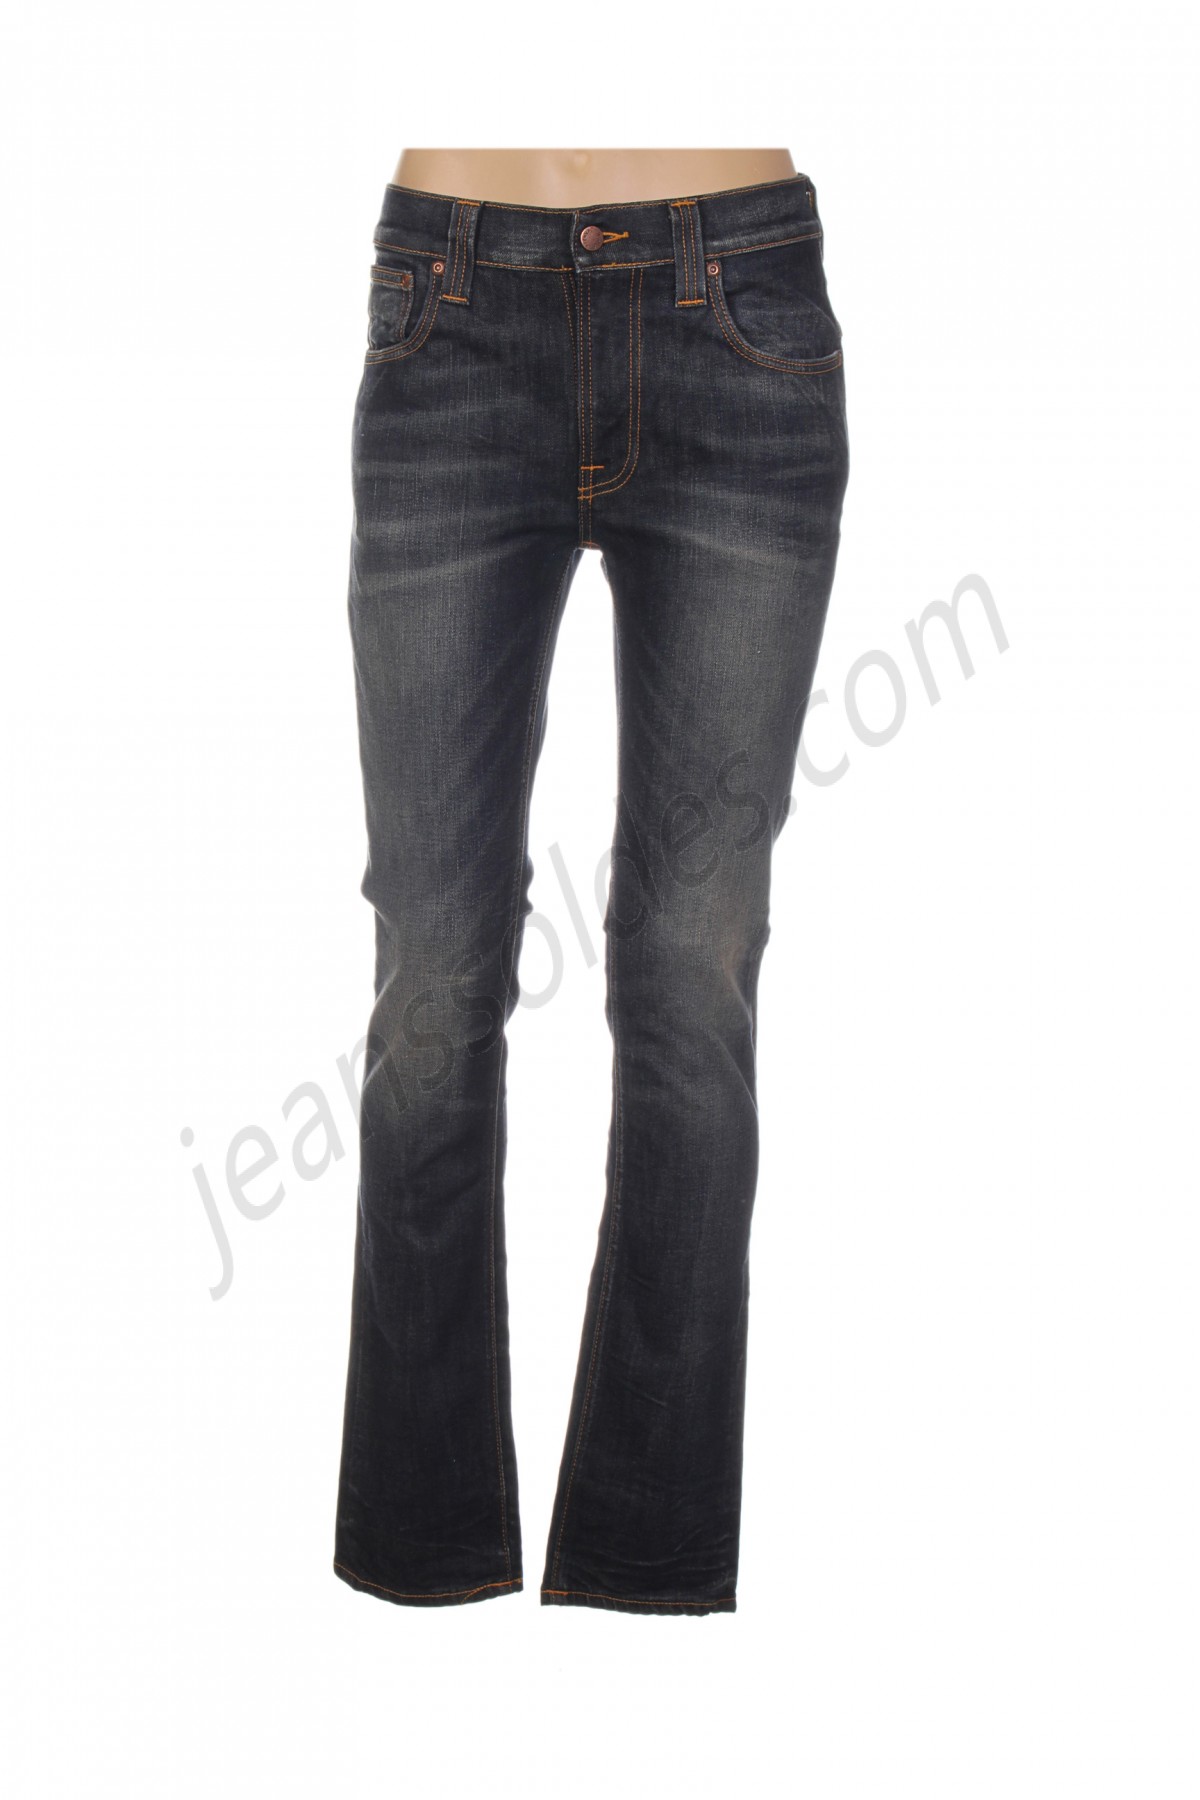 nudie jeans co-Jeans coupe slim prix d’amis - -0